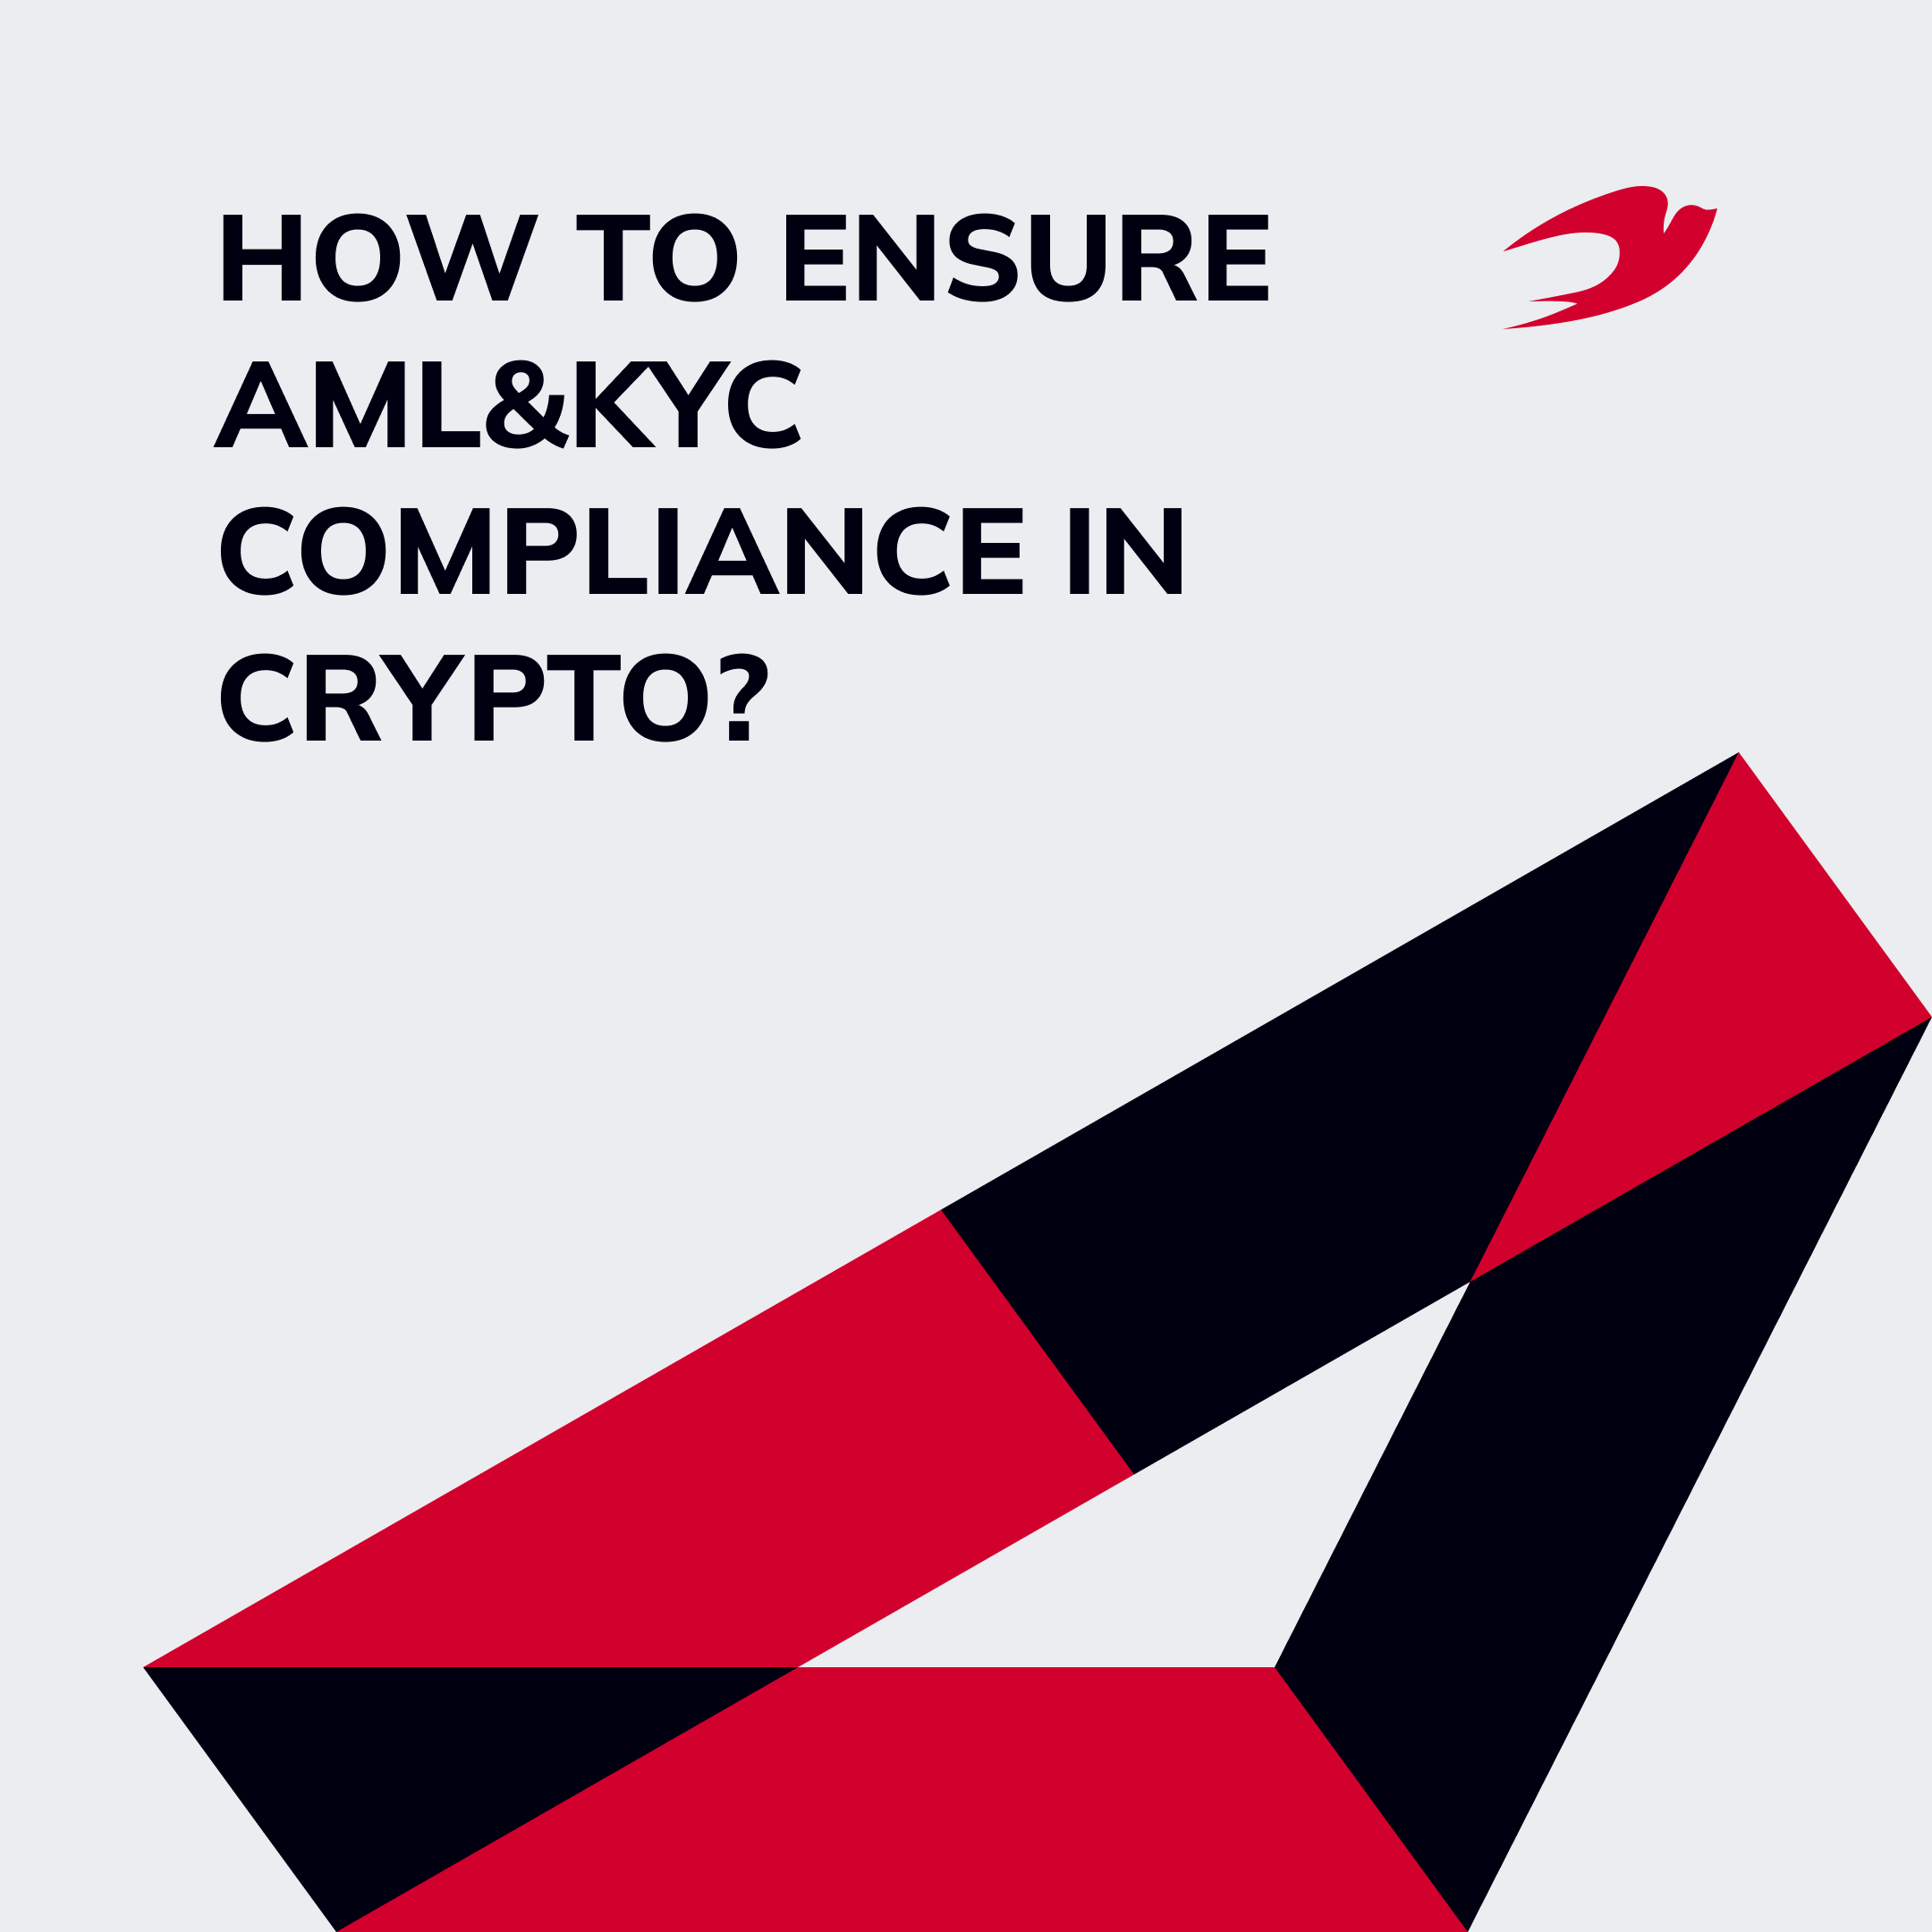 AML/KYC in crypto